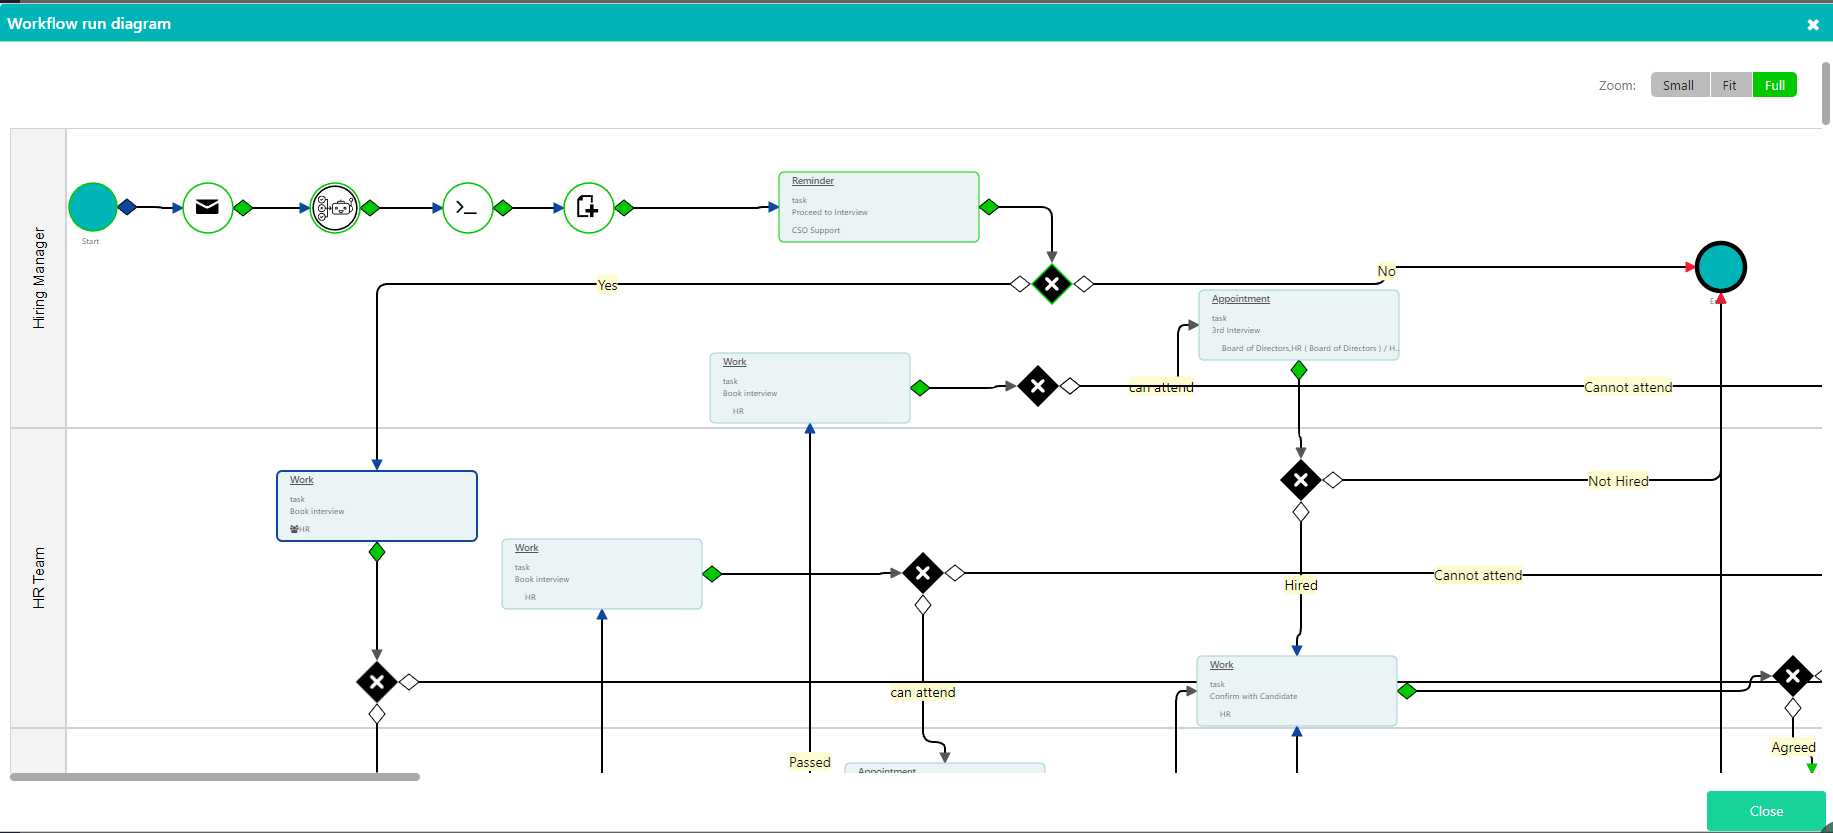 Workflow App run diagram | Comidor Platform